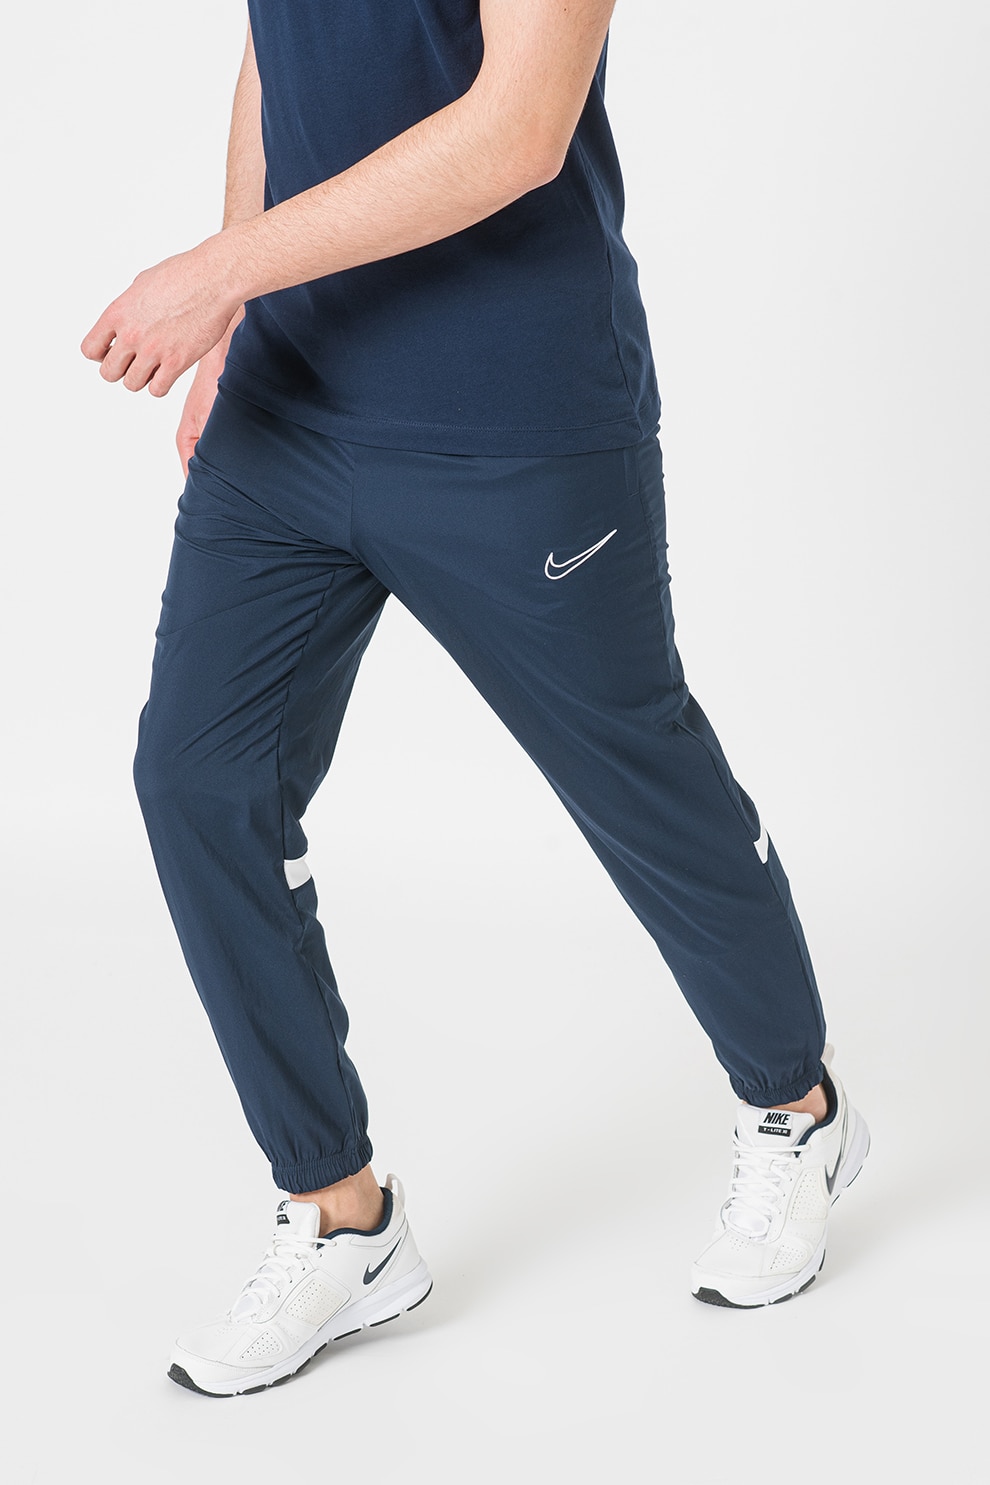 Constraints Own Gentleman Nike, Pantaloni cu tehnologie Dri-Fit, pentru fotbal - eMAG.ro